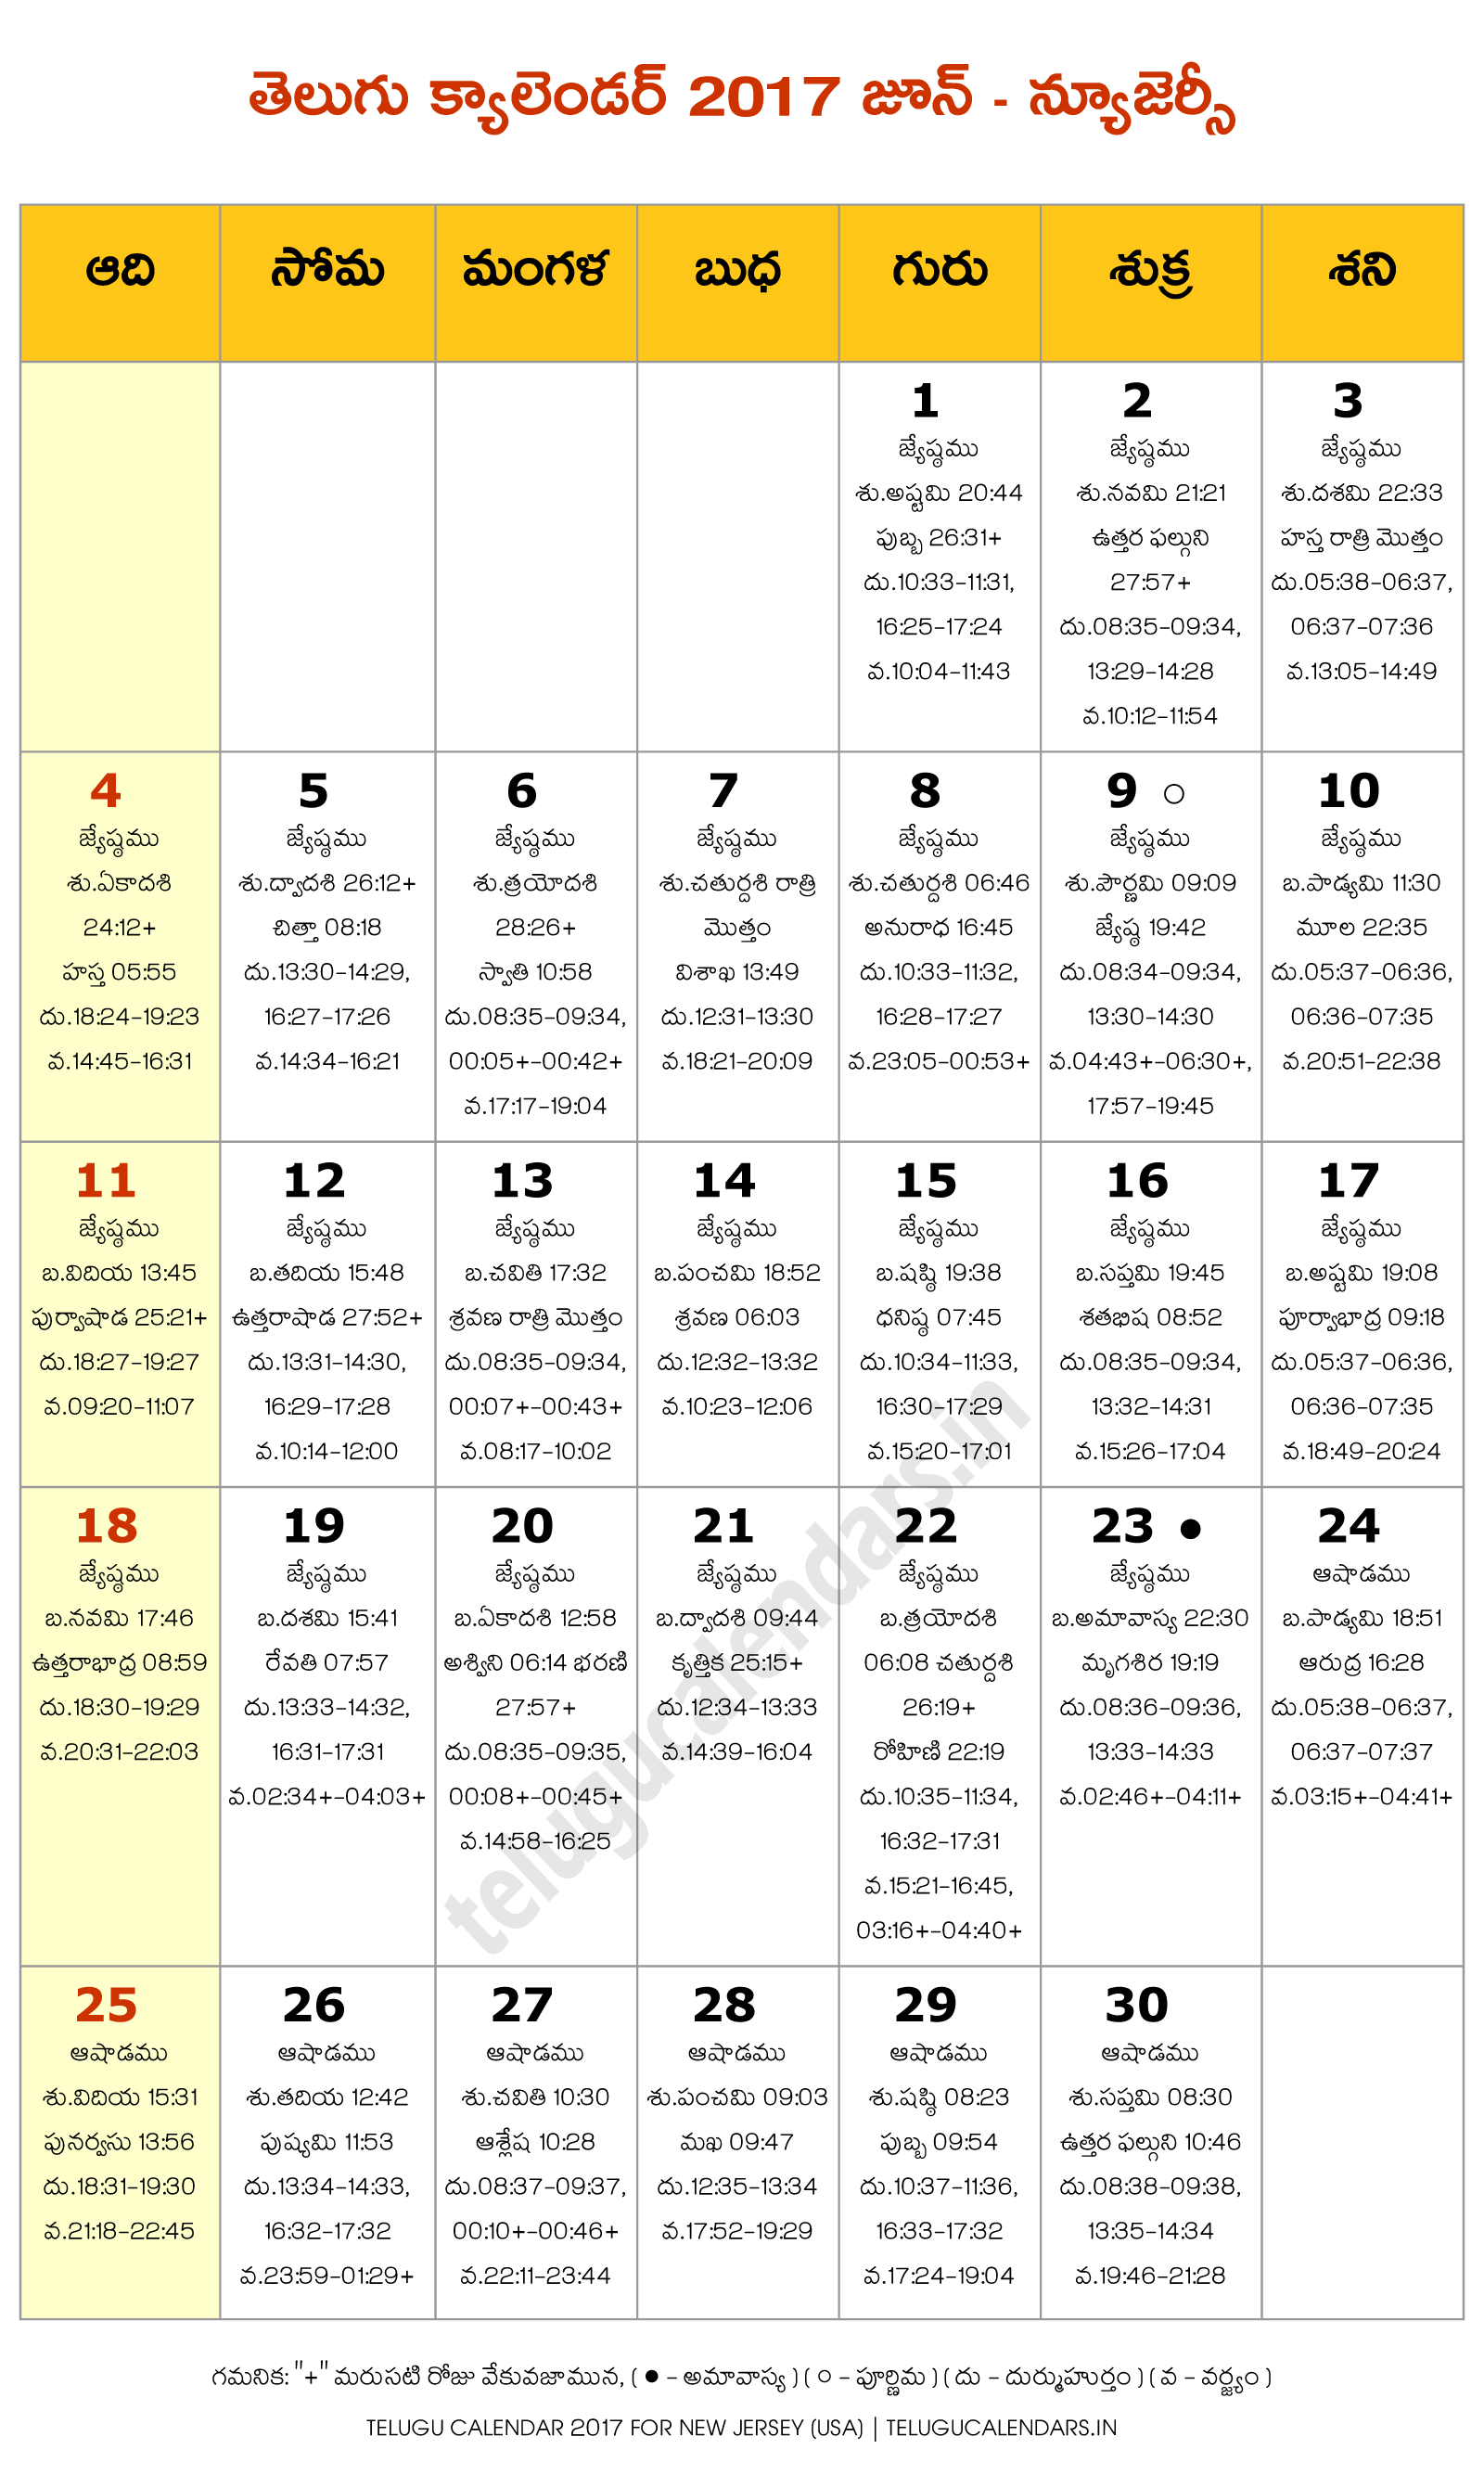 New Jersey 2017 June Telugu Calendar | Telugu Calendars